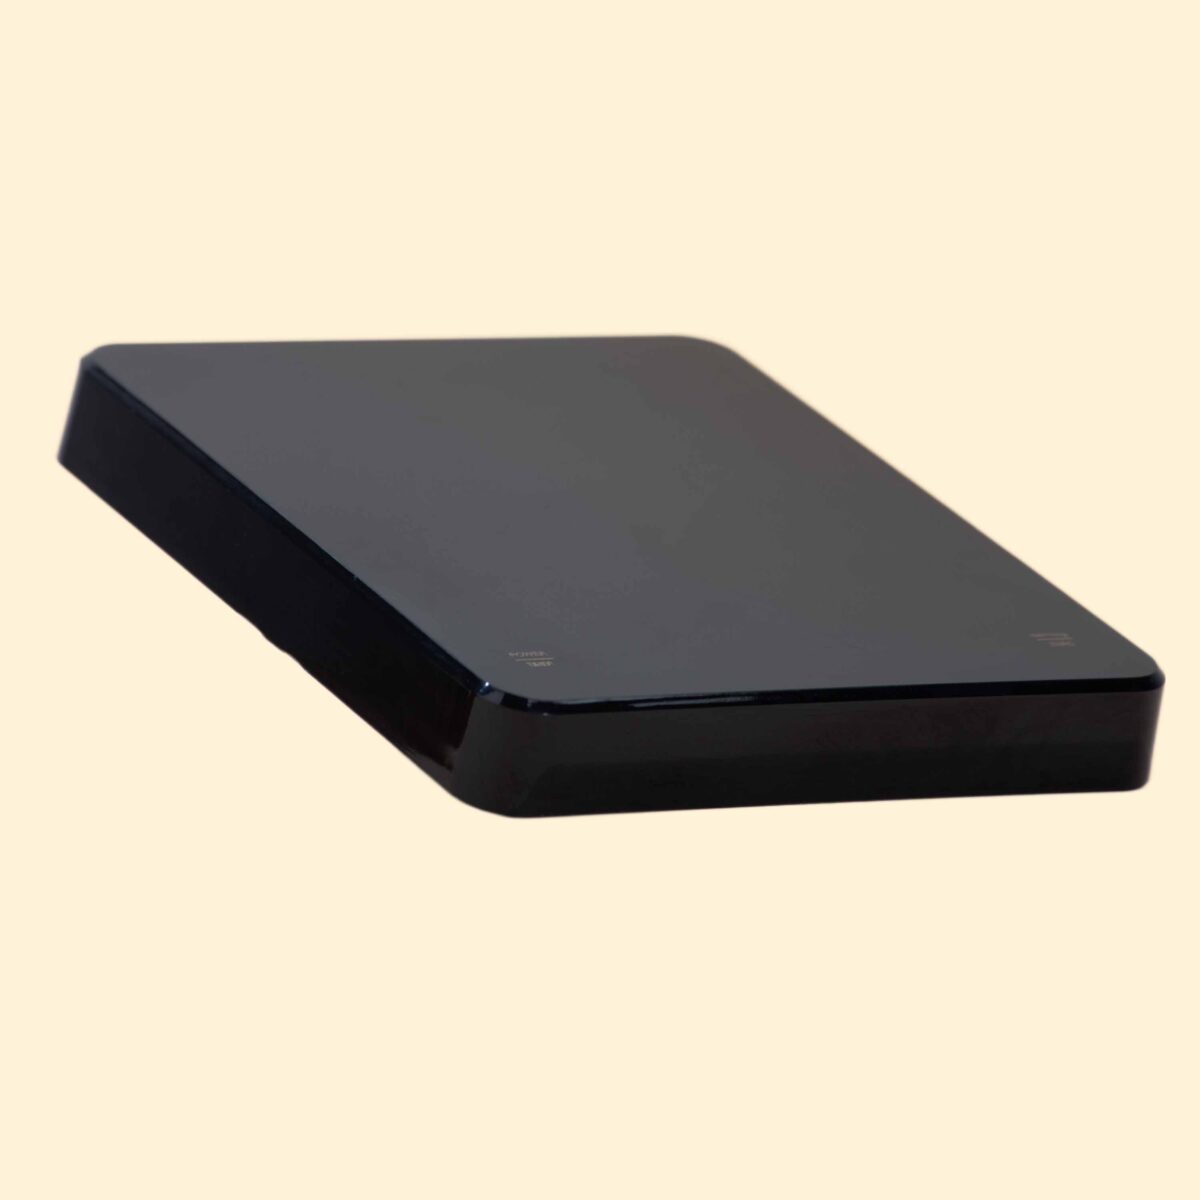 Gramera Digital Negra Recargable scaled - Gramera Digital USB con Temporizador